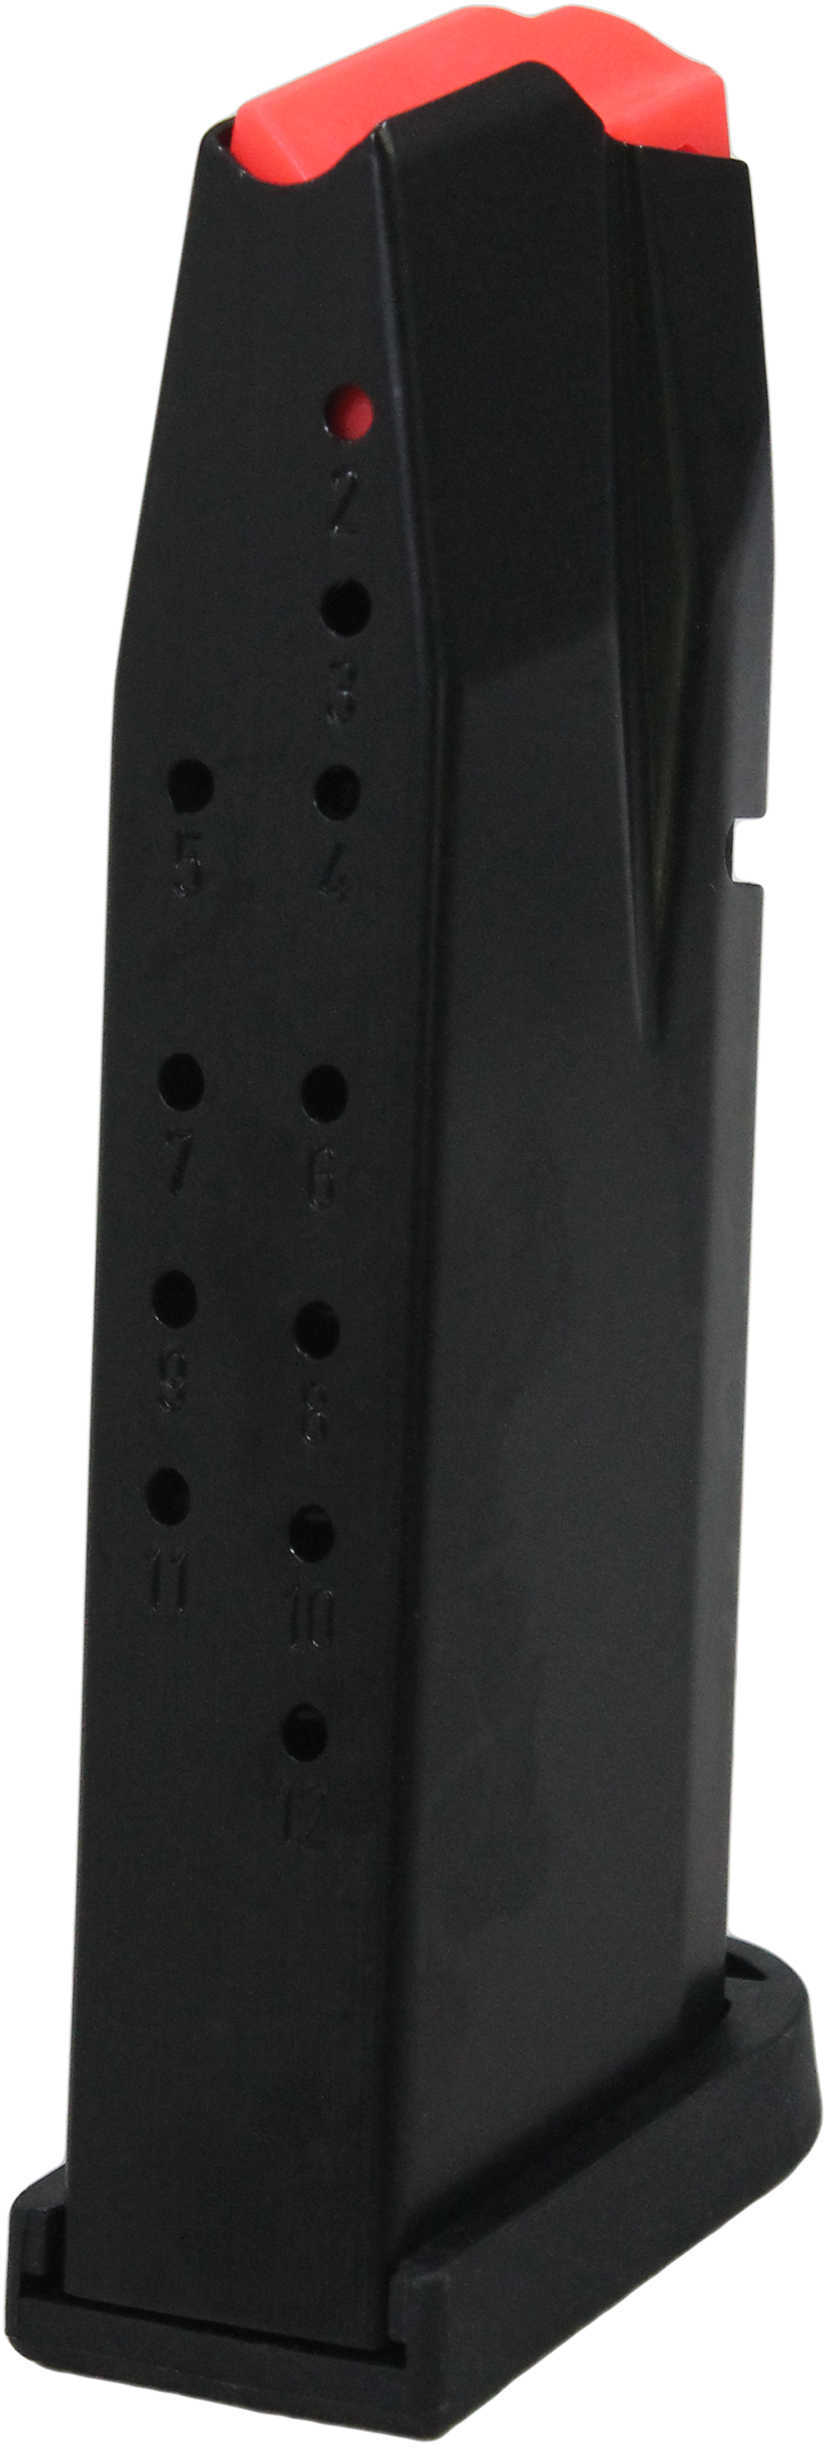 CZ USA P-10C Handgun Magazine .40 Smith & Wesson, 12 Rounds, Black Md: 11525